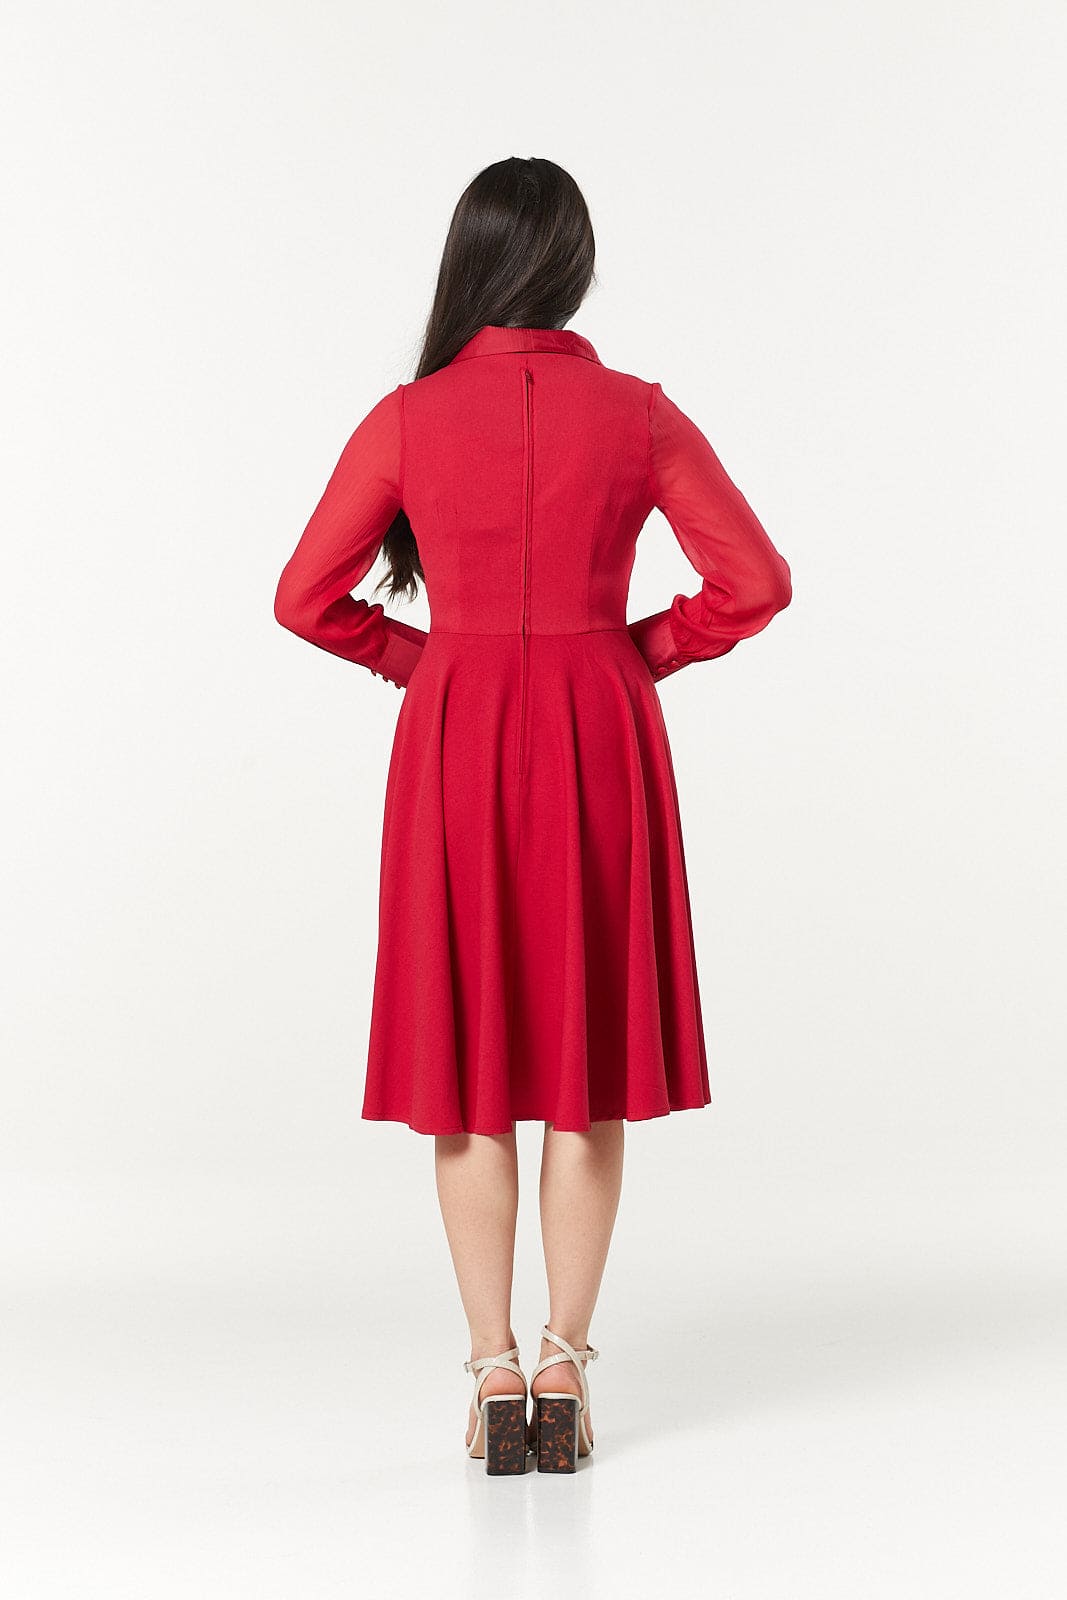 Polly Midi A- Line Long Chiffon Sleeves Red Dress